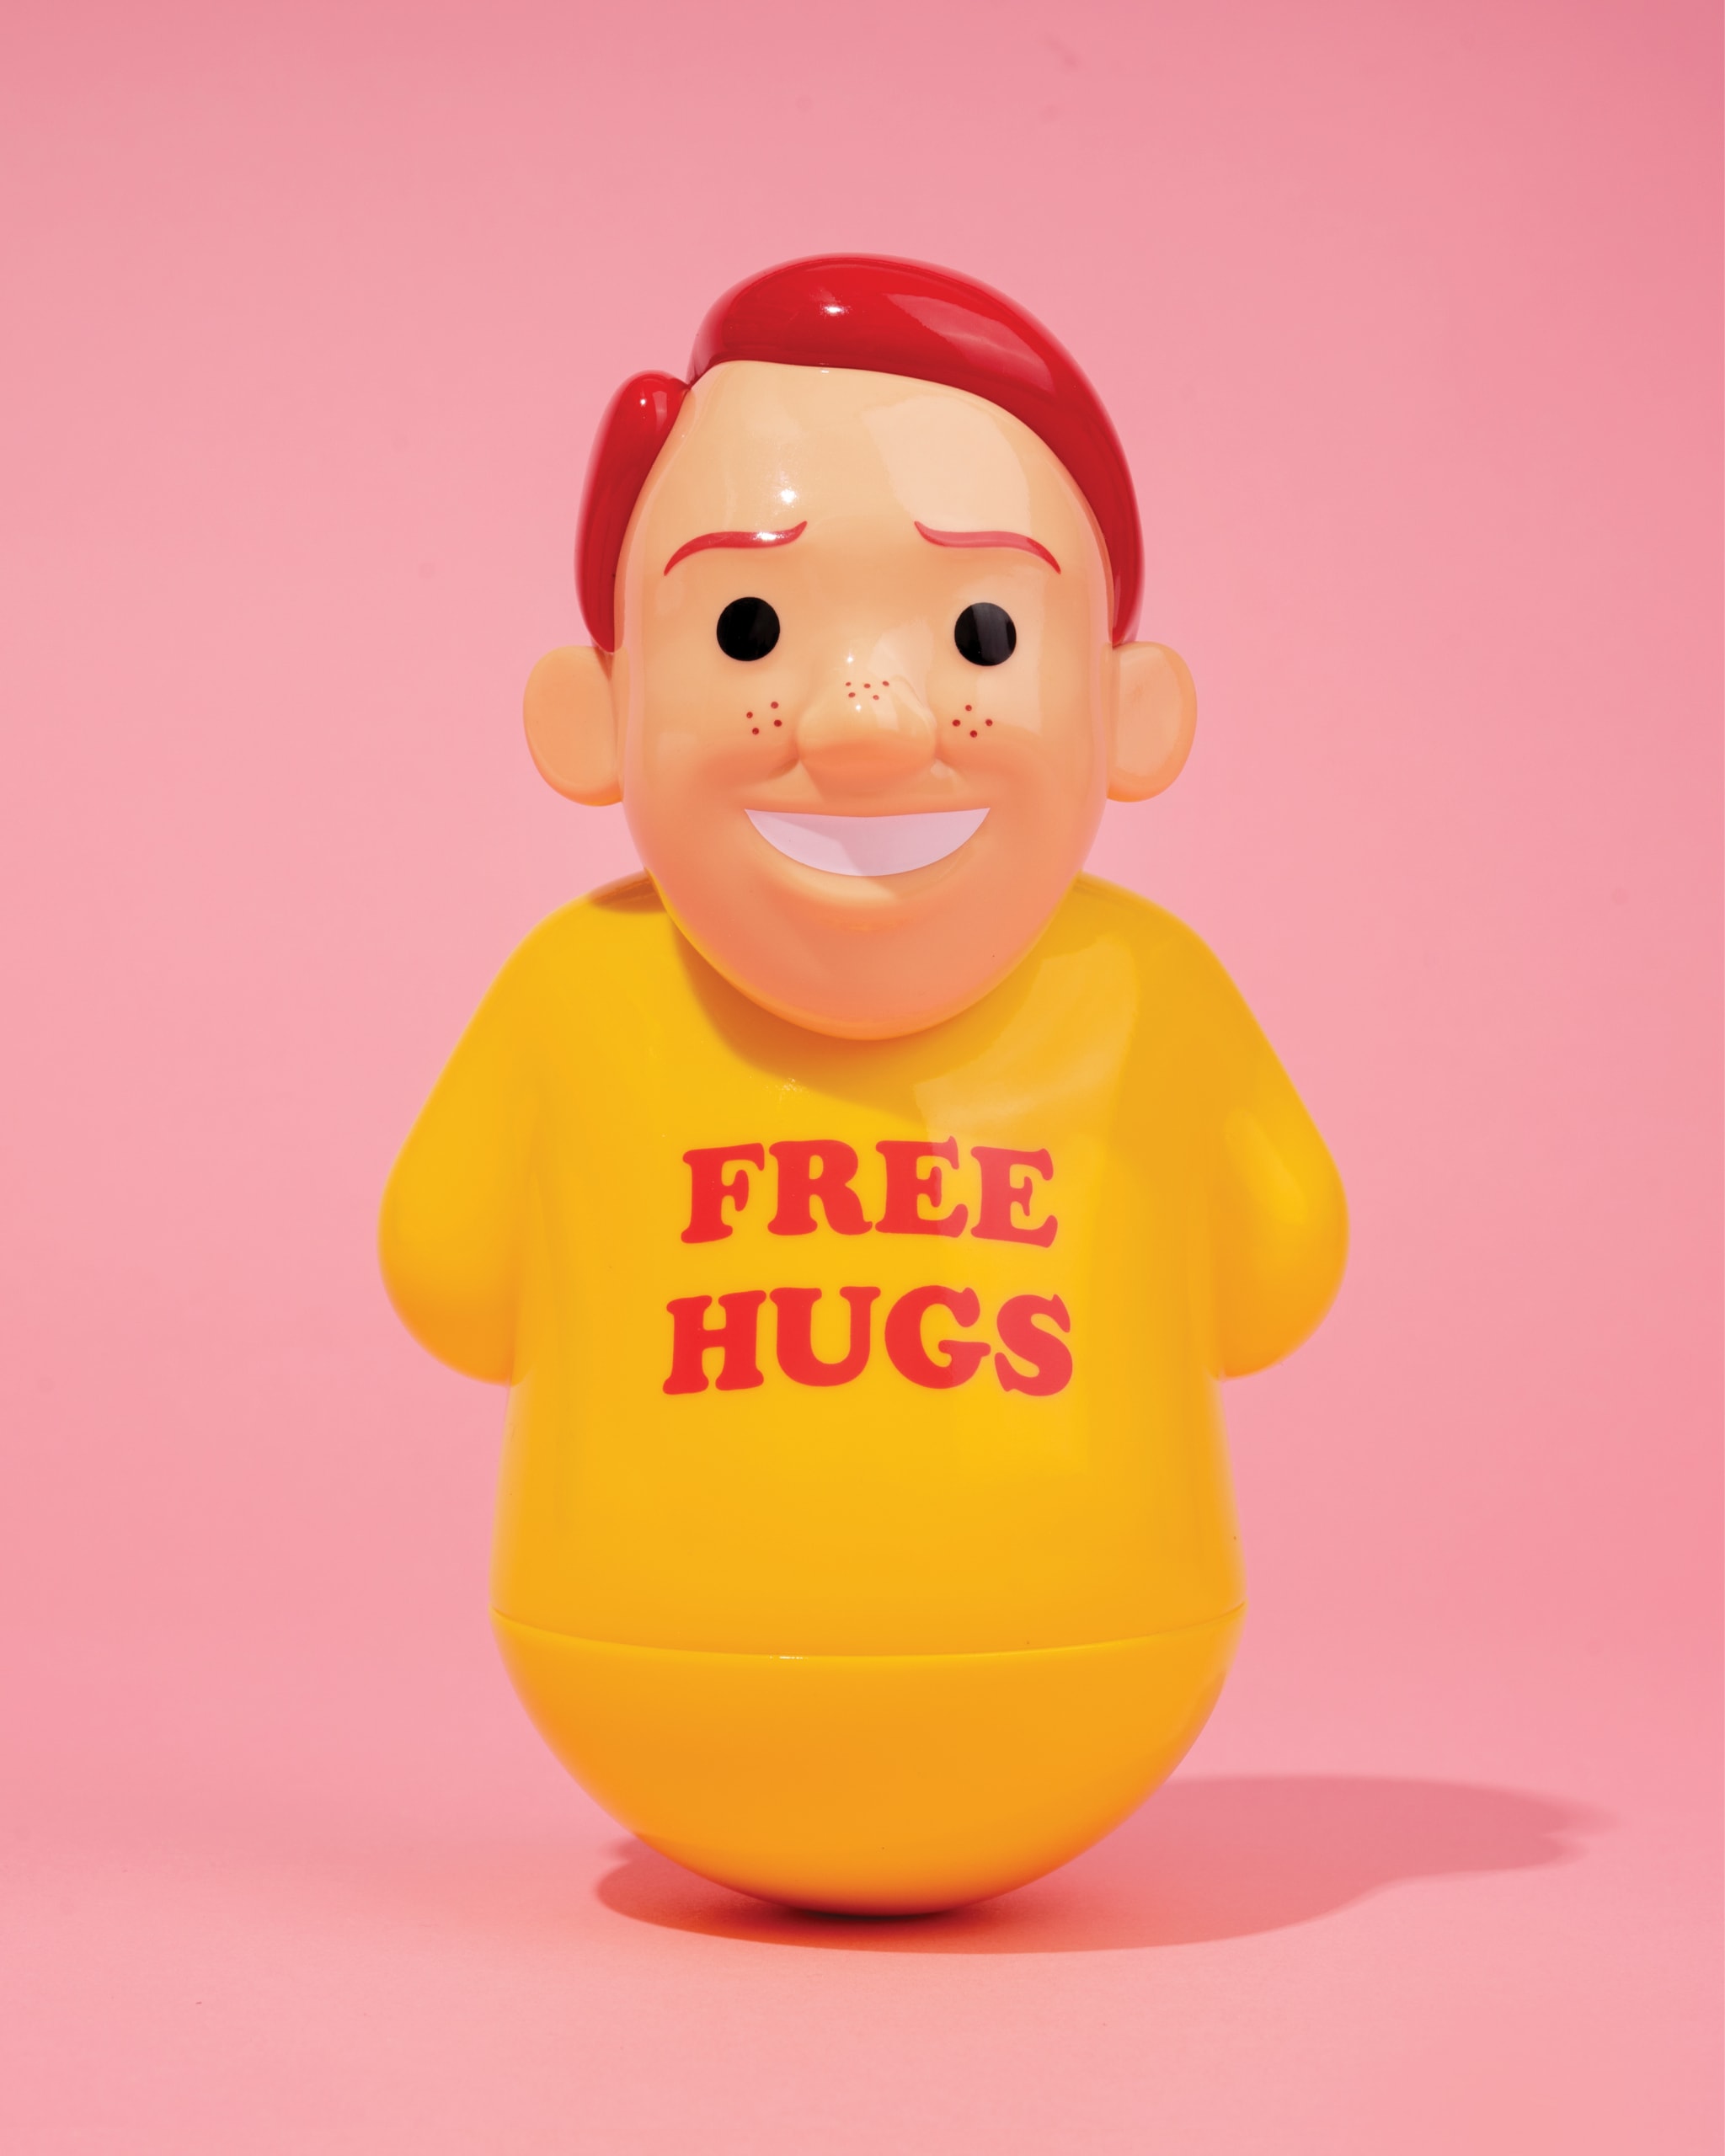 Joan Cornellà 全新《Free Hugs》搪膠公仔正式發佈